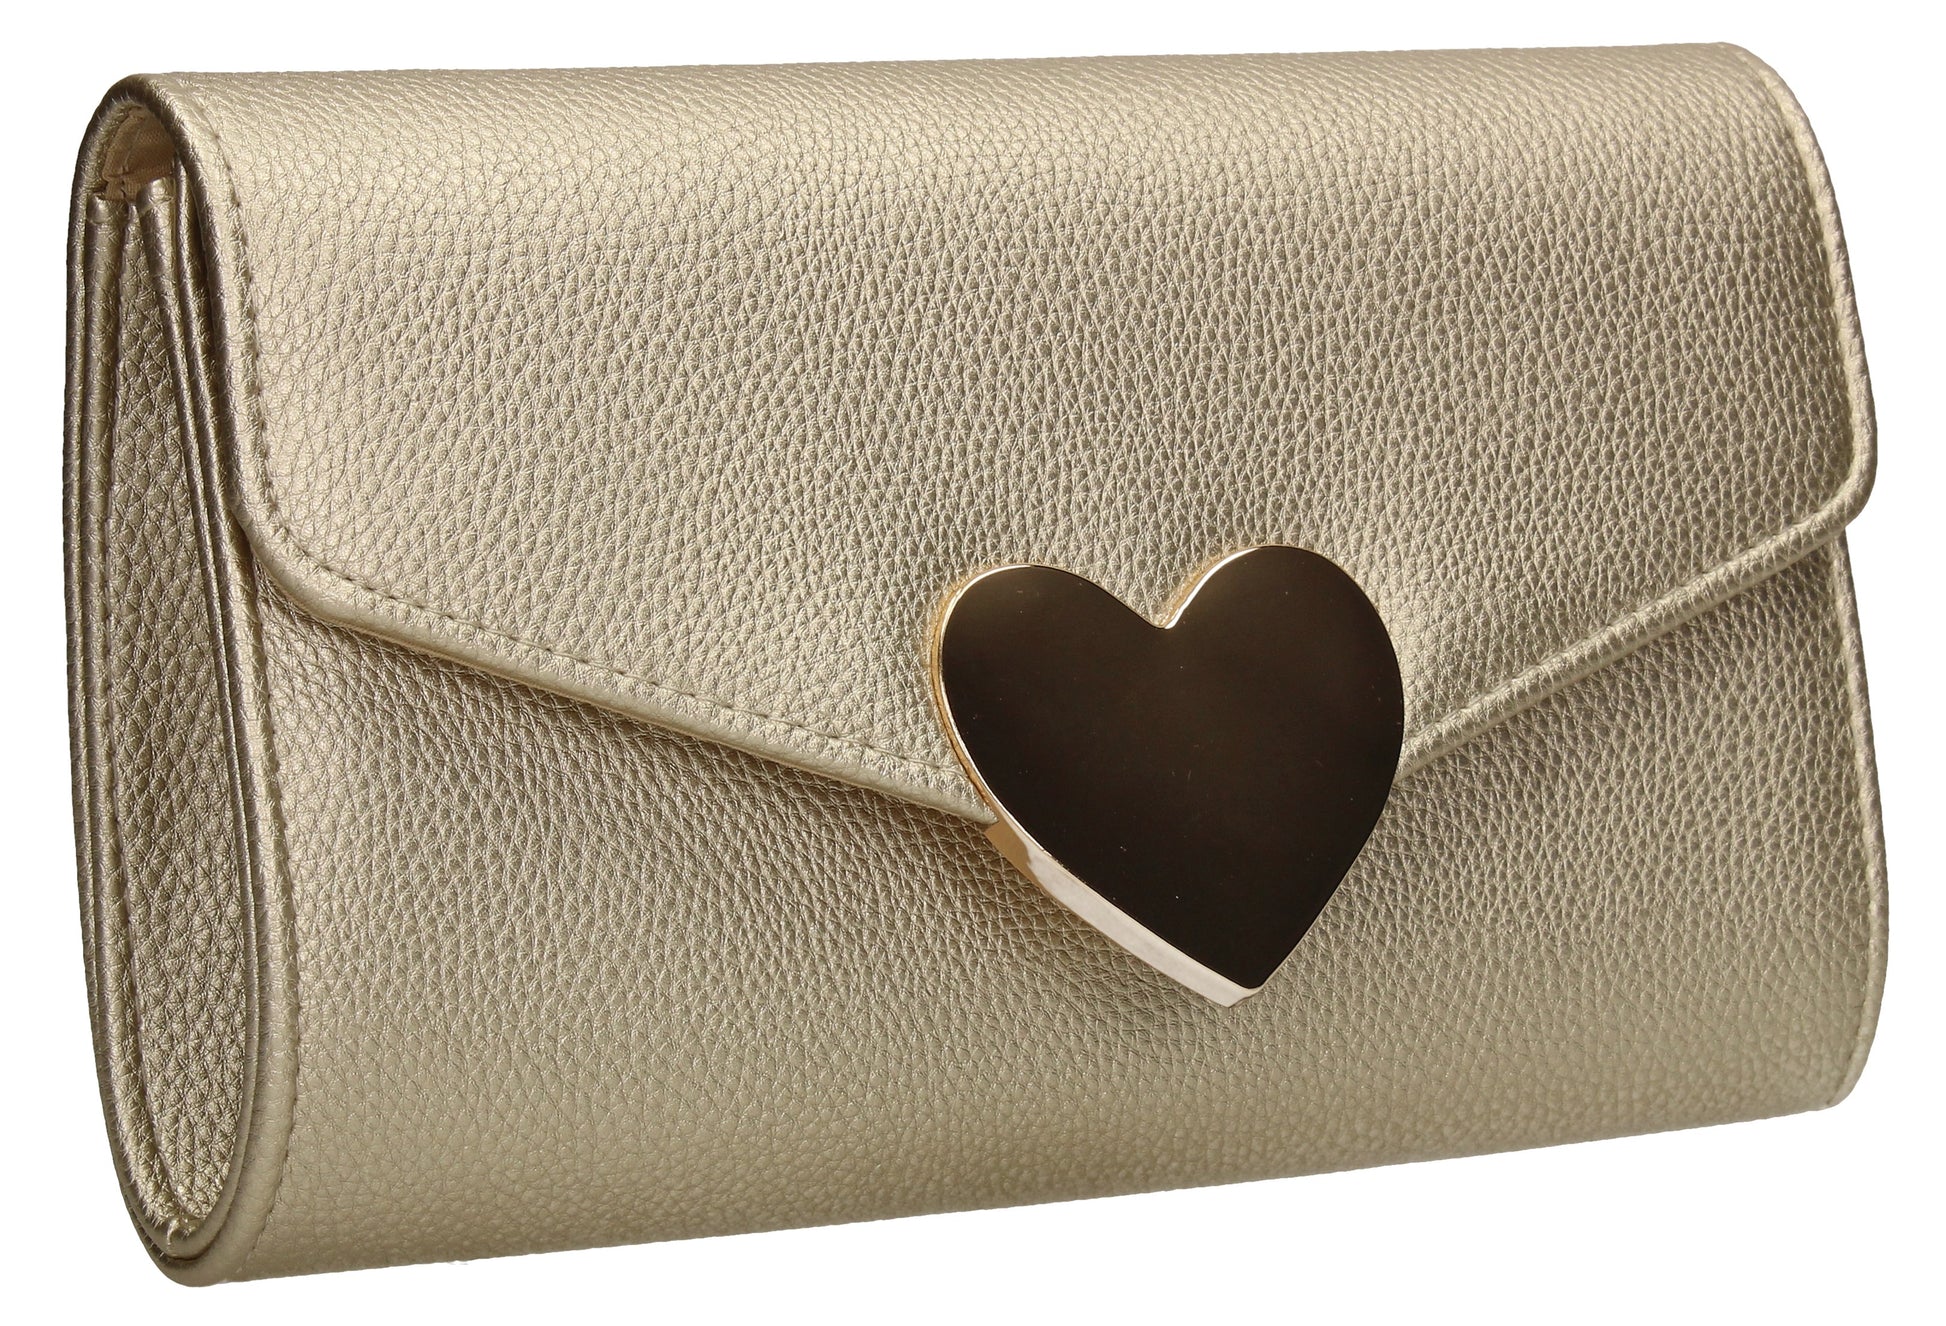 SWANKYSWANS Corrie Heart Clutch Bag Gold Cute Cheap Clutch Bag For Weddings School and Work